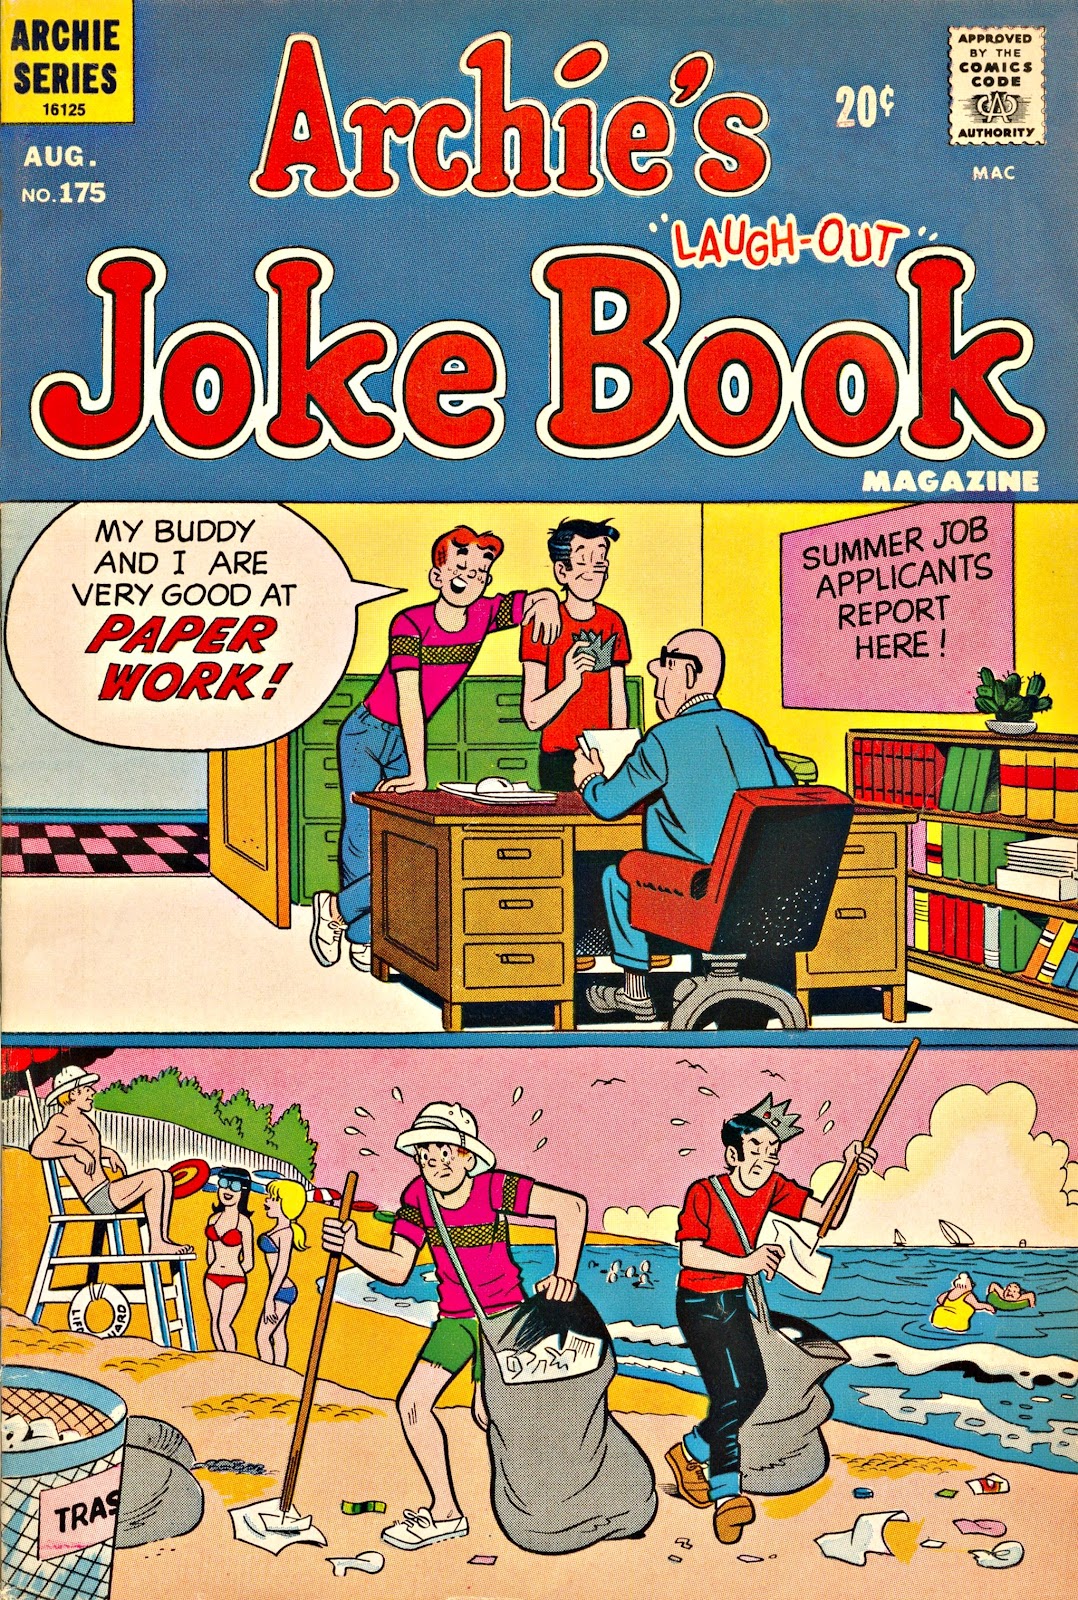 Archie's Joke Book Magazine issue 175 - Page 1